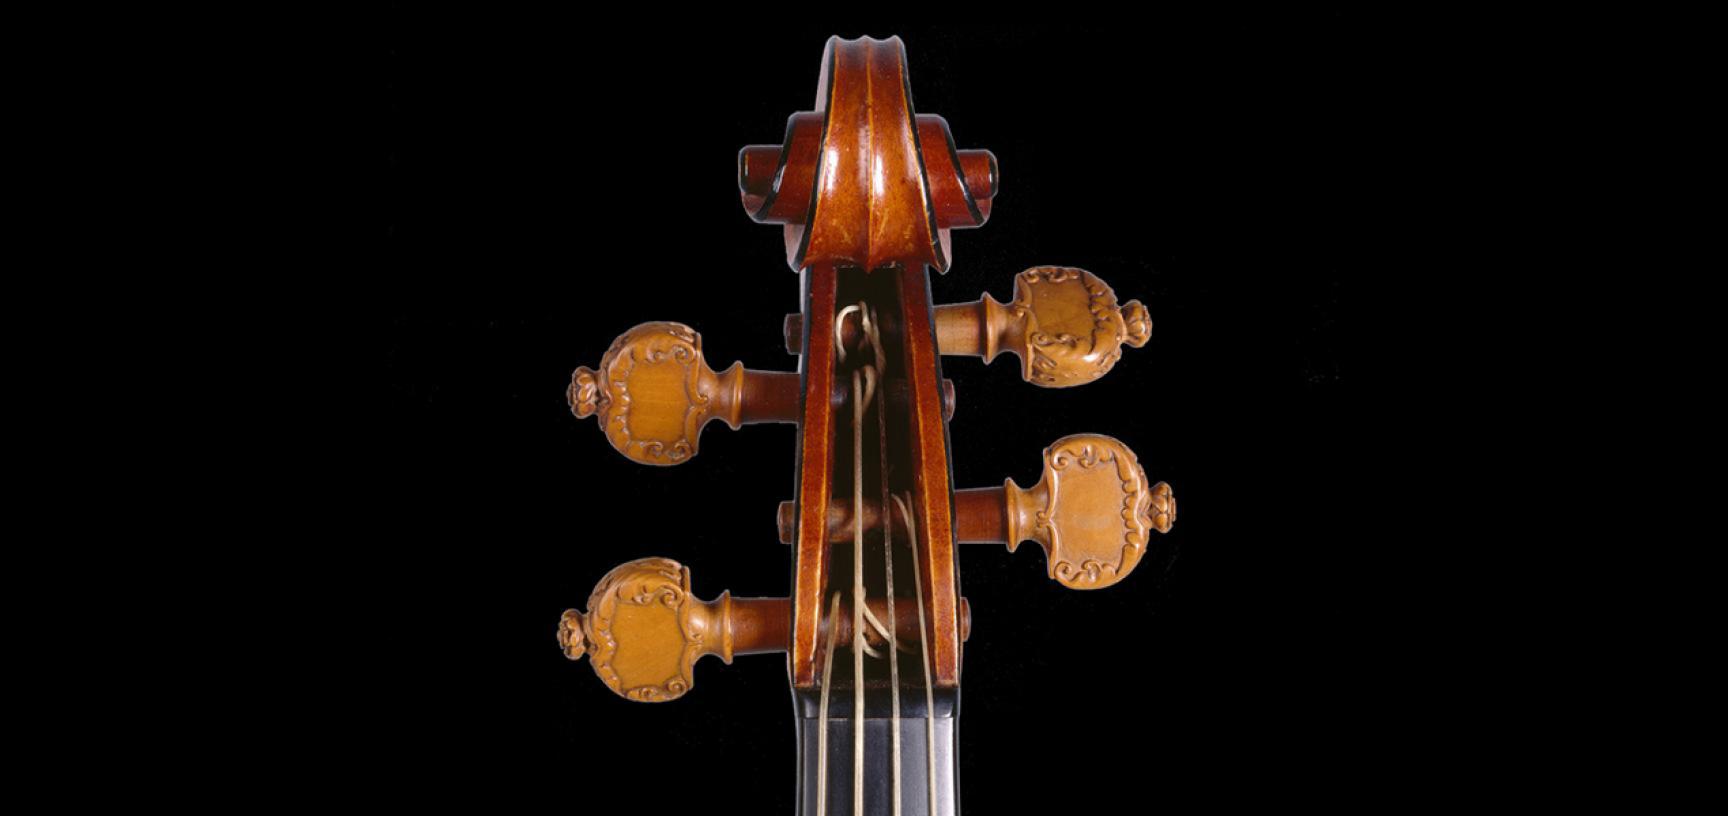 The ‘Messiah’ Violin by Antonio Stradivari (detail)